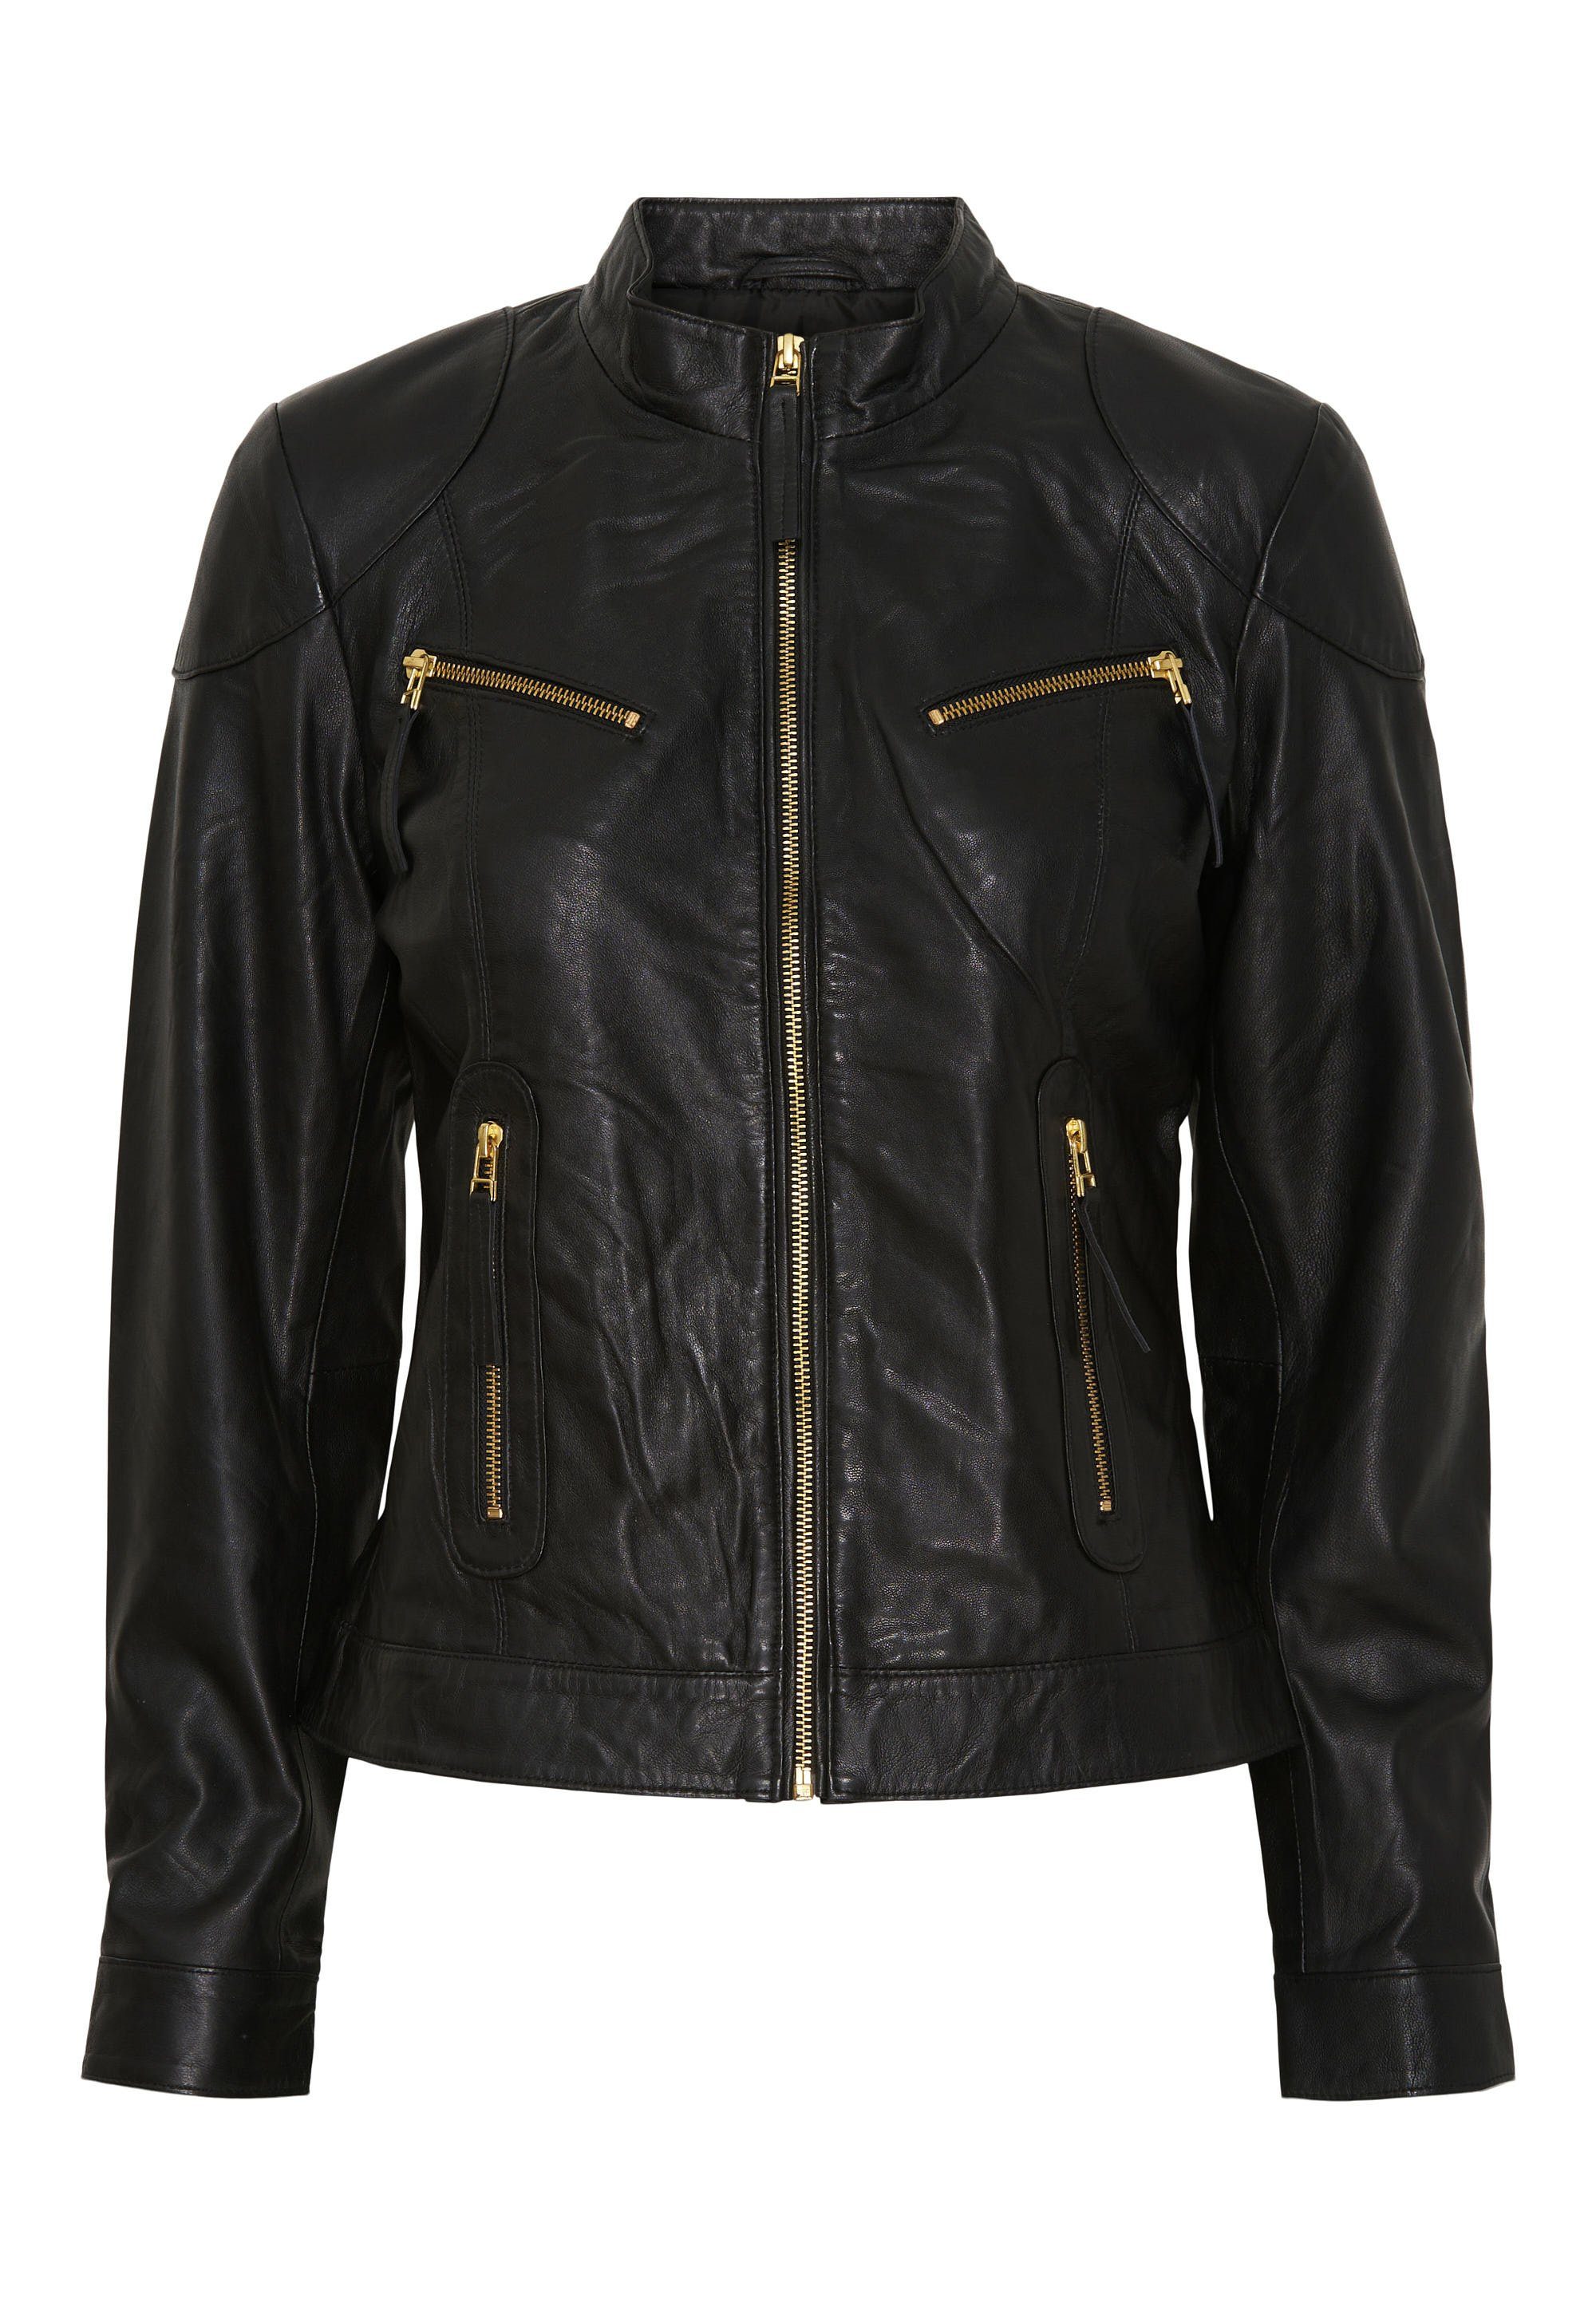 black/gold Bikerjacke Lederjacke, Reißverschluss, NoBella NOTYZ Reißverschlusstaschen